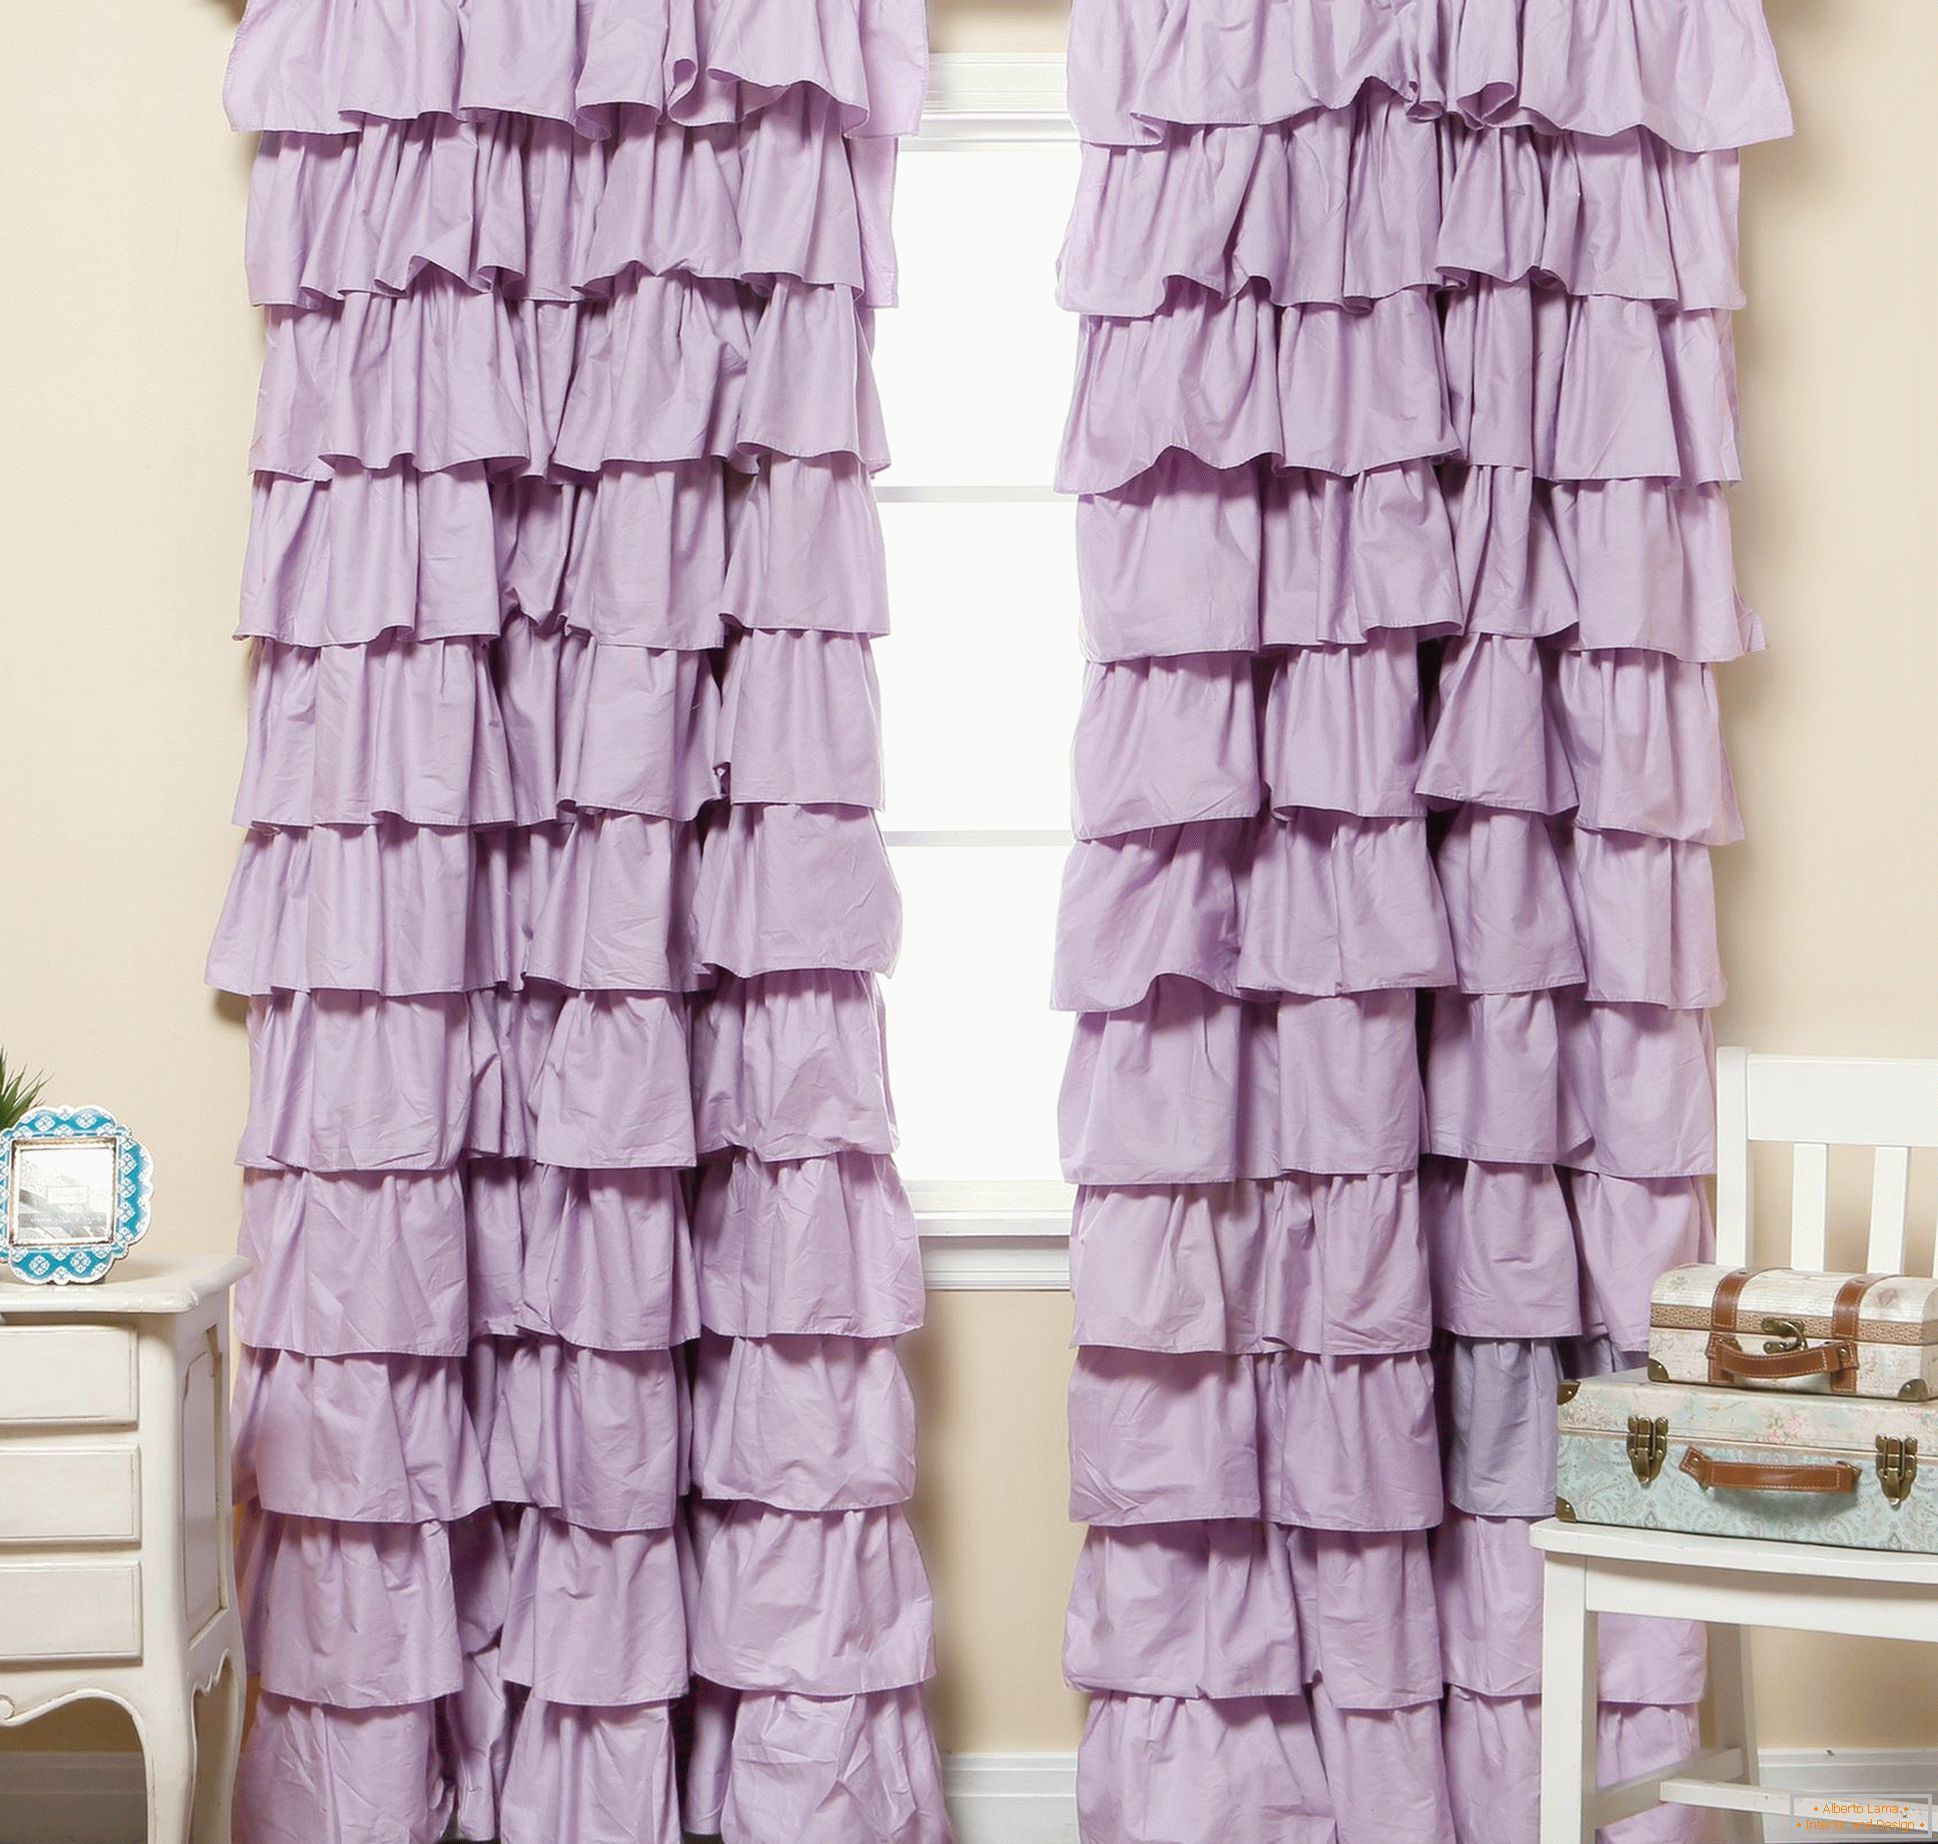 Original purple curtains